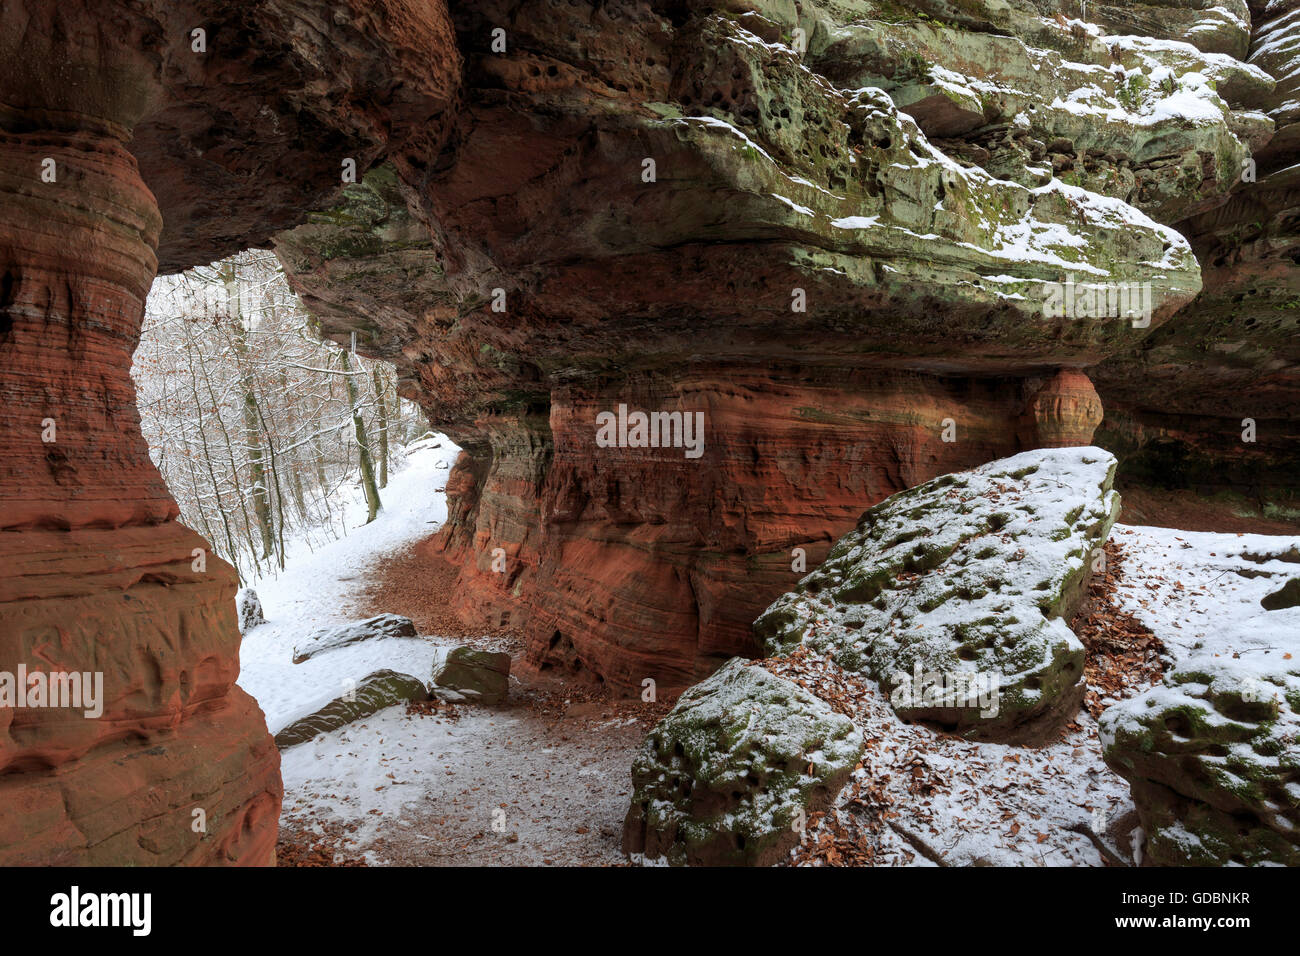 Natural monument, Winter, Altschlossfelsen, Eppenbrunn, Rhineland-Palatinate, Germany Stock Photo